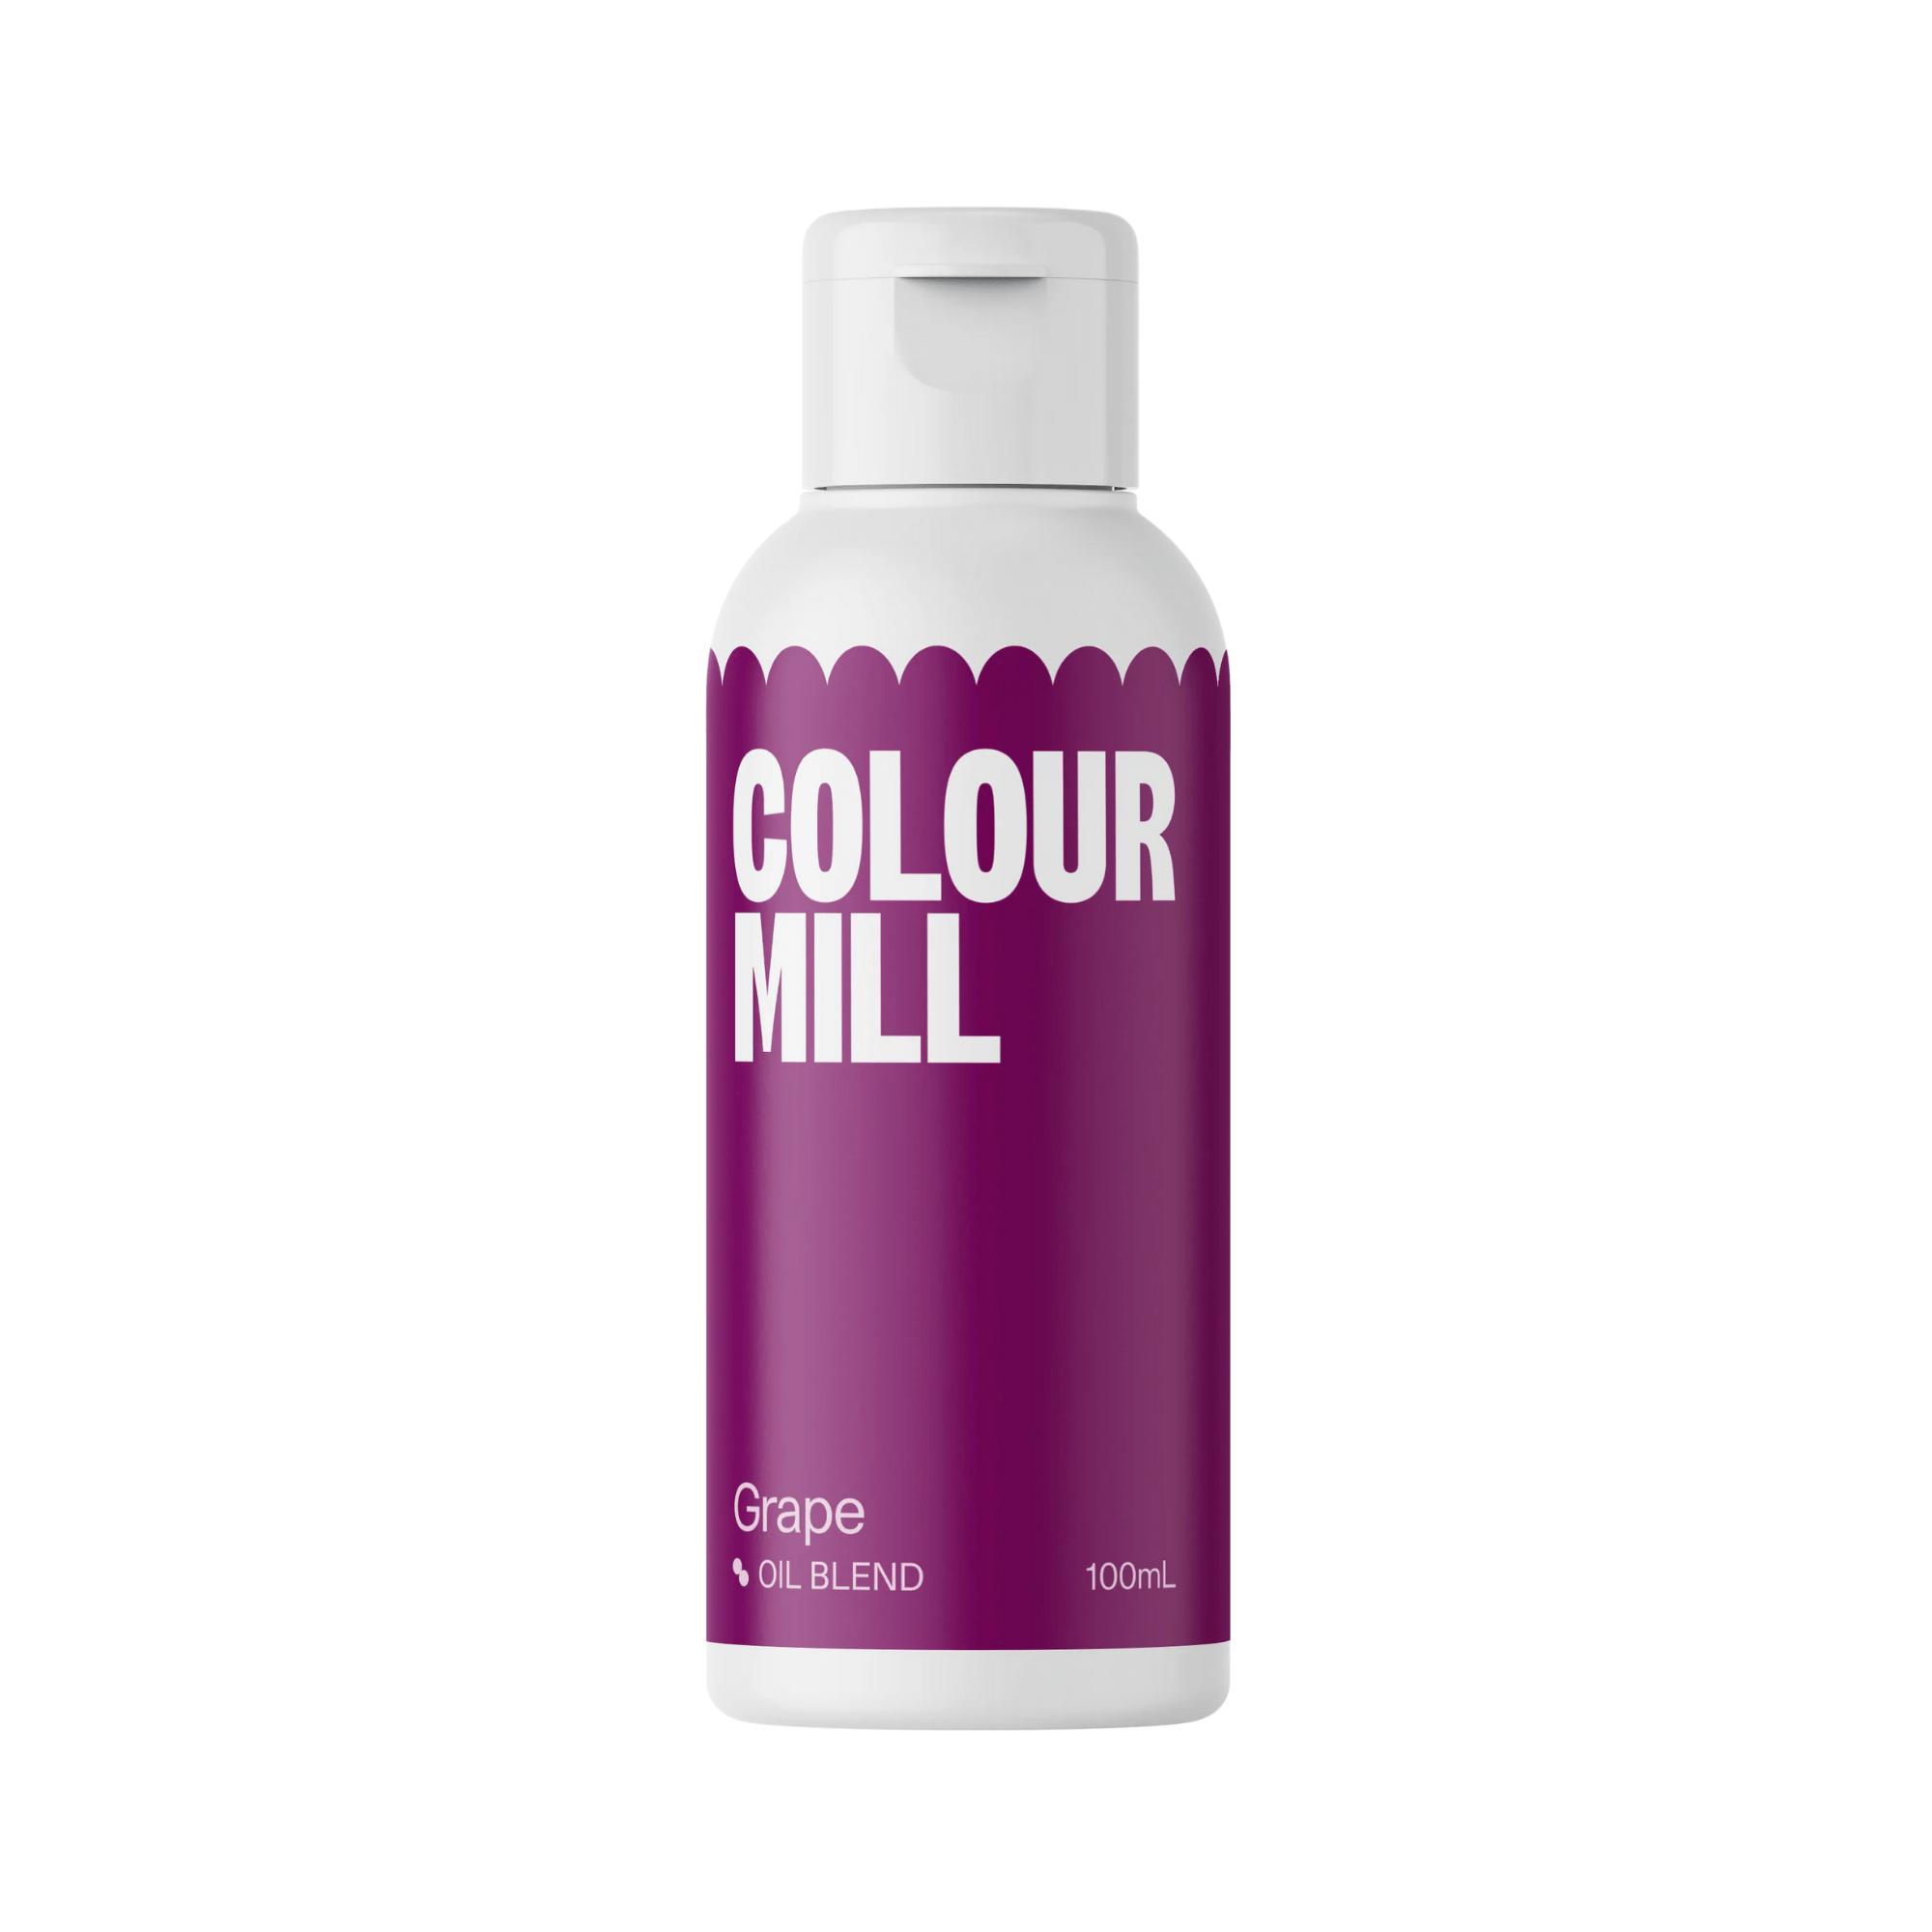 Happy Sprinkles Streusel 100ml Colour Mill Grape - Oil Blend